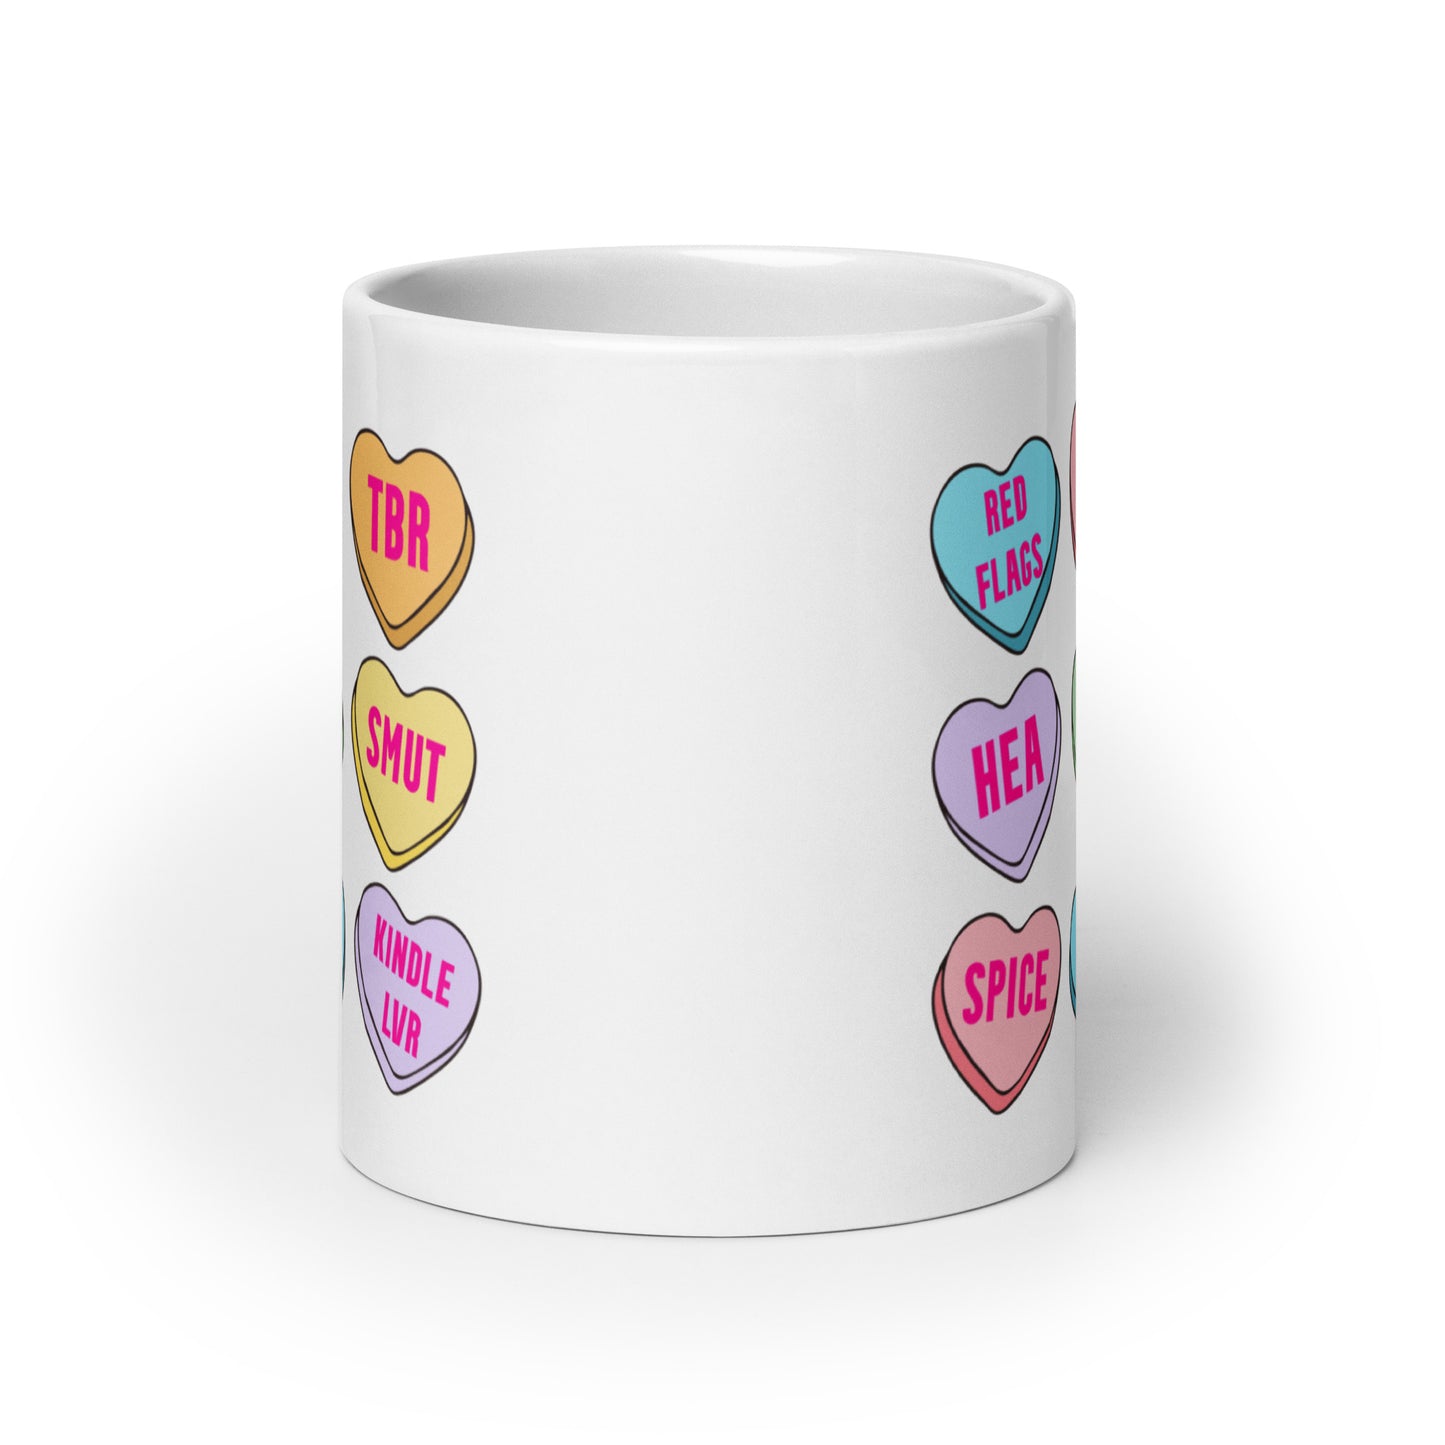 Bookstagram Candy Hearts Valentines White glossy mug